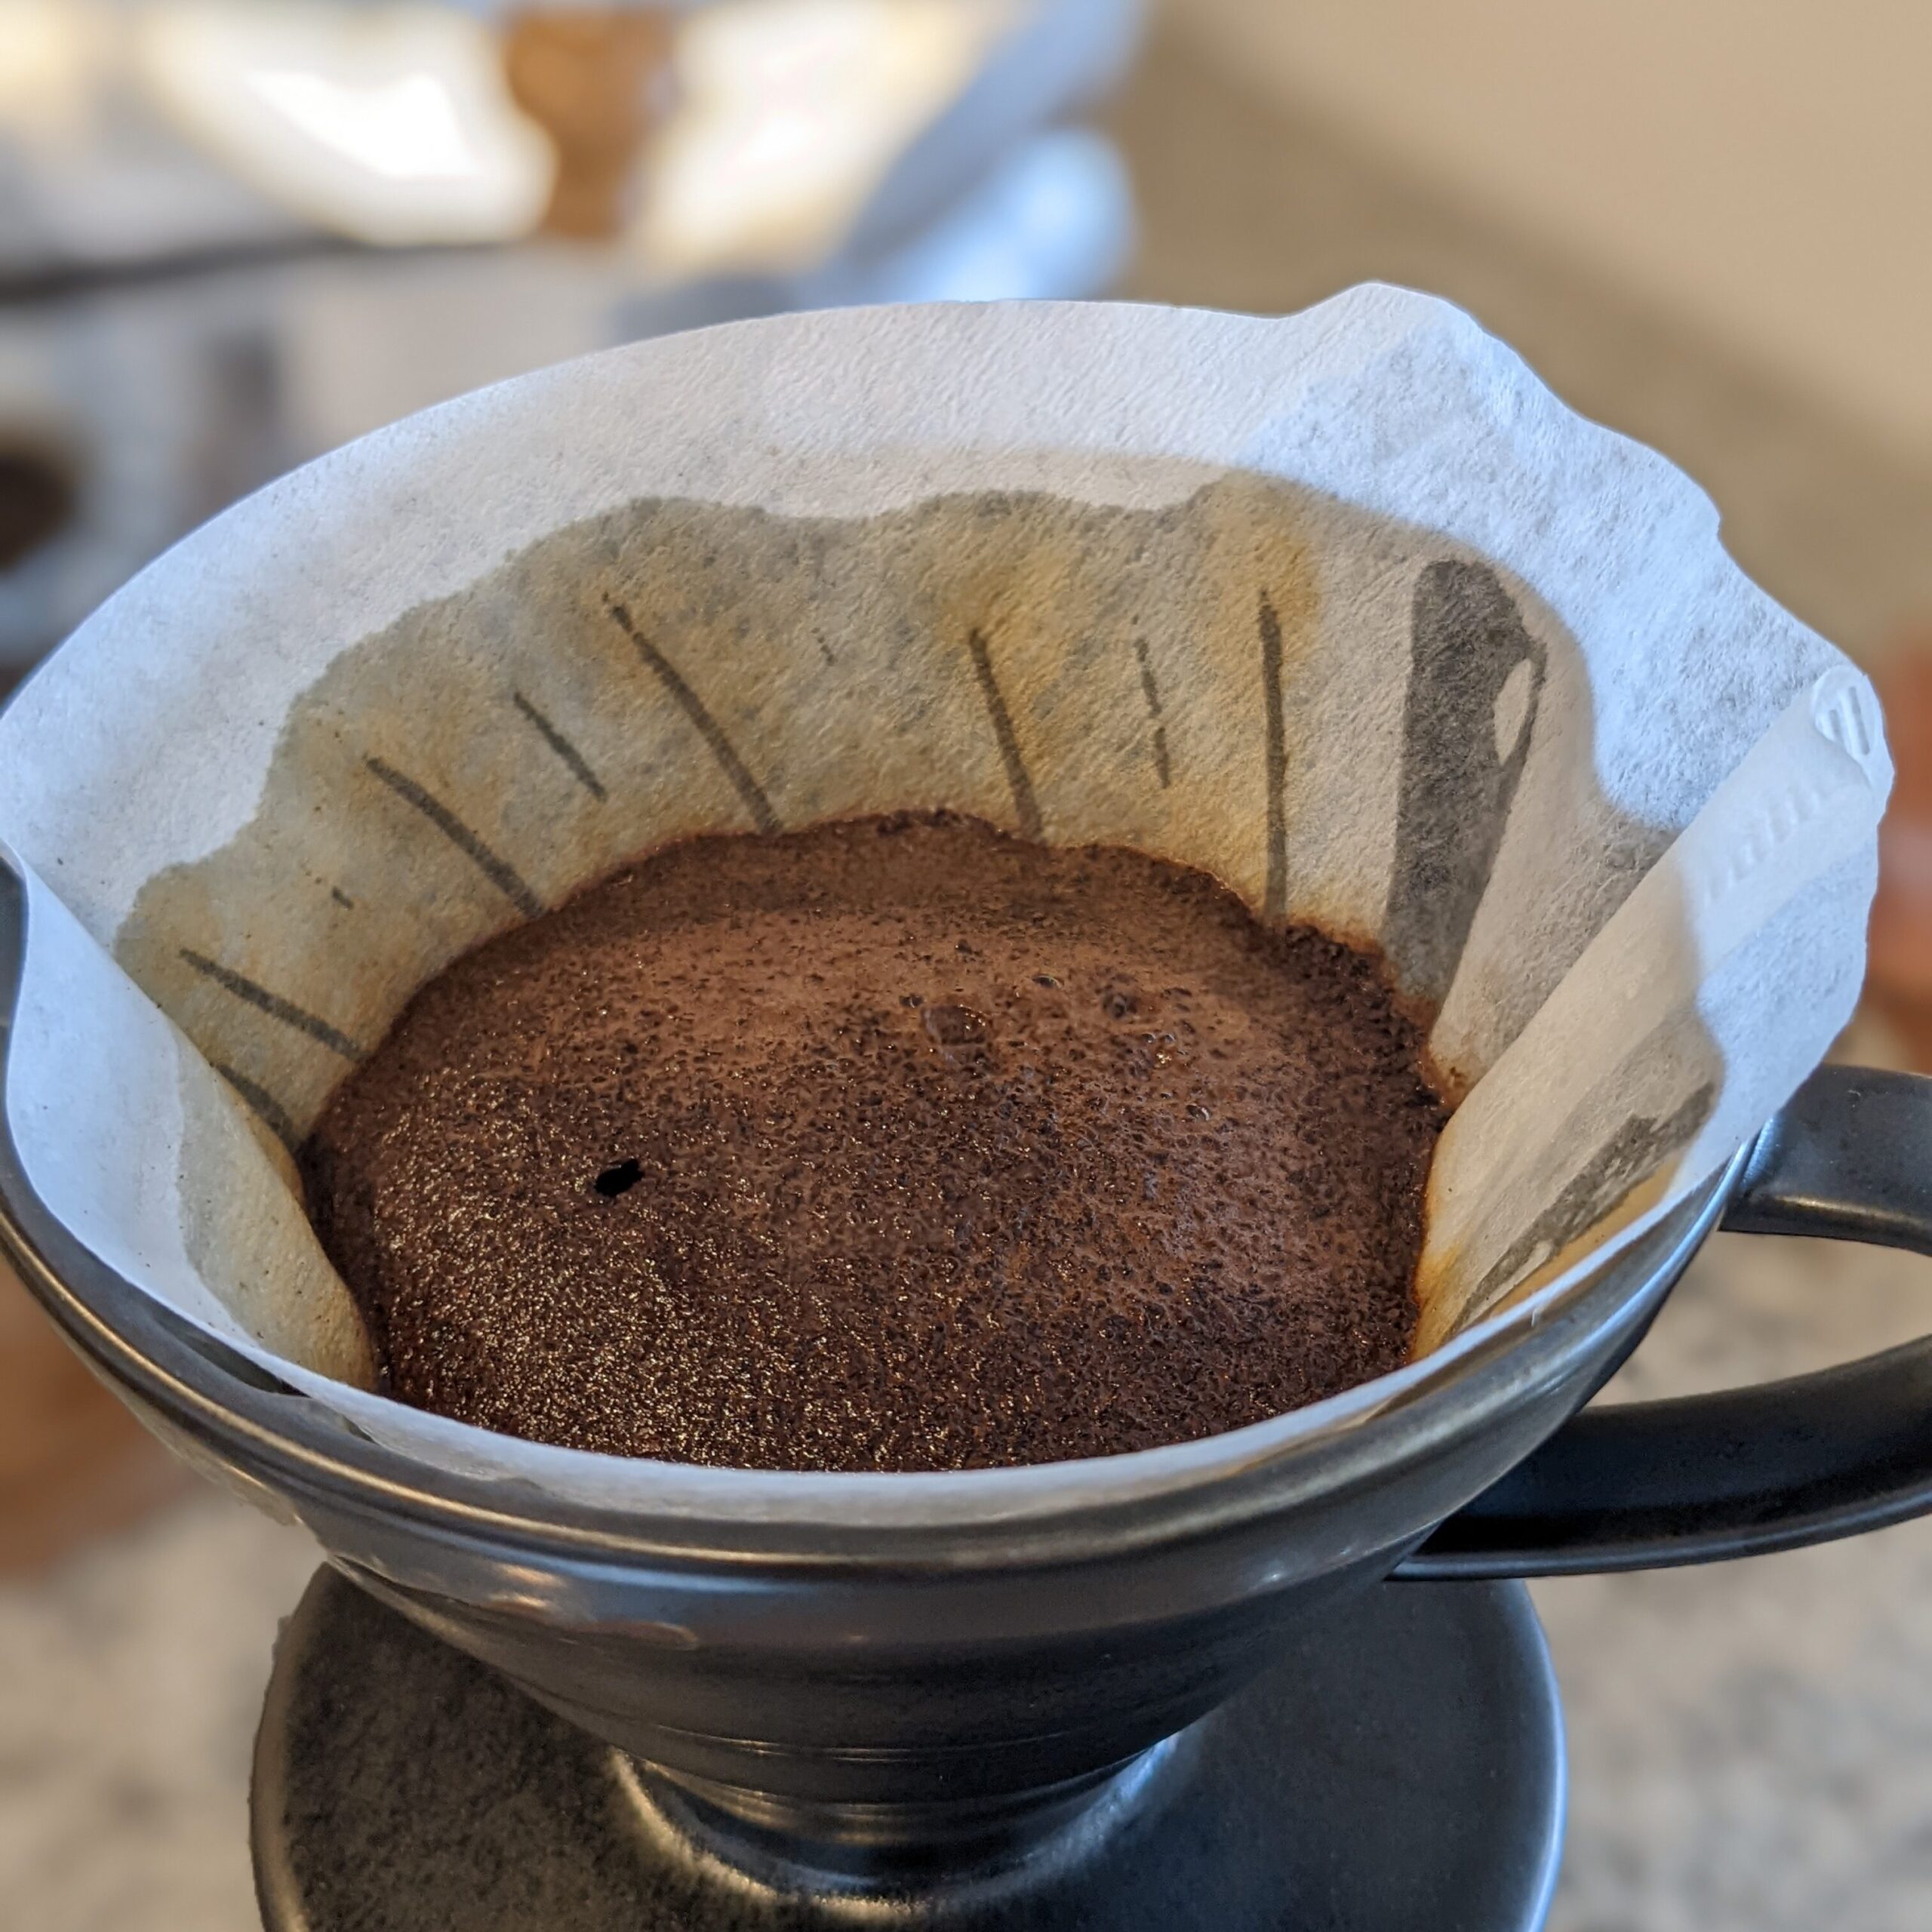 coffee-dripper-hario02-coffeebeans